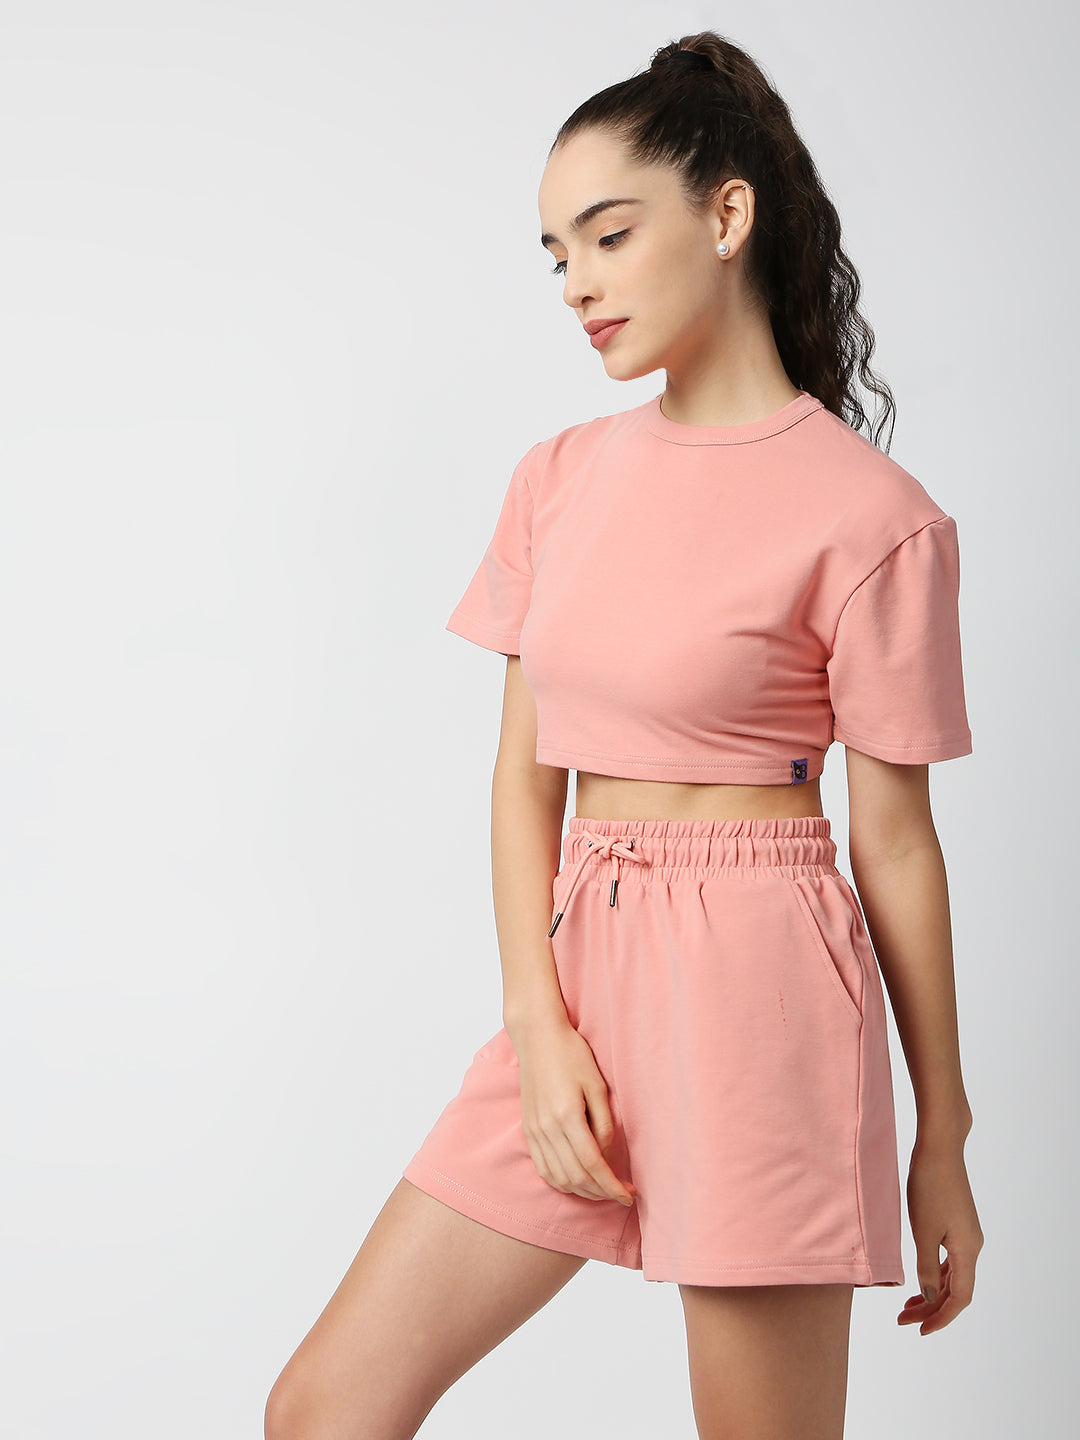 Buy Blamblack Women's Plain Peach color Half sleeves and Short Set